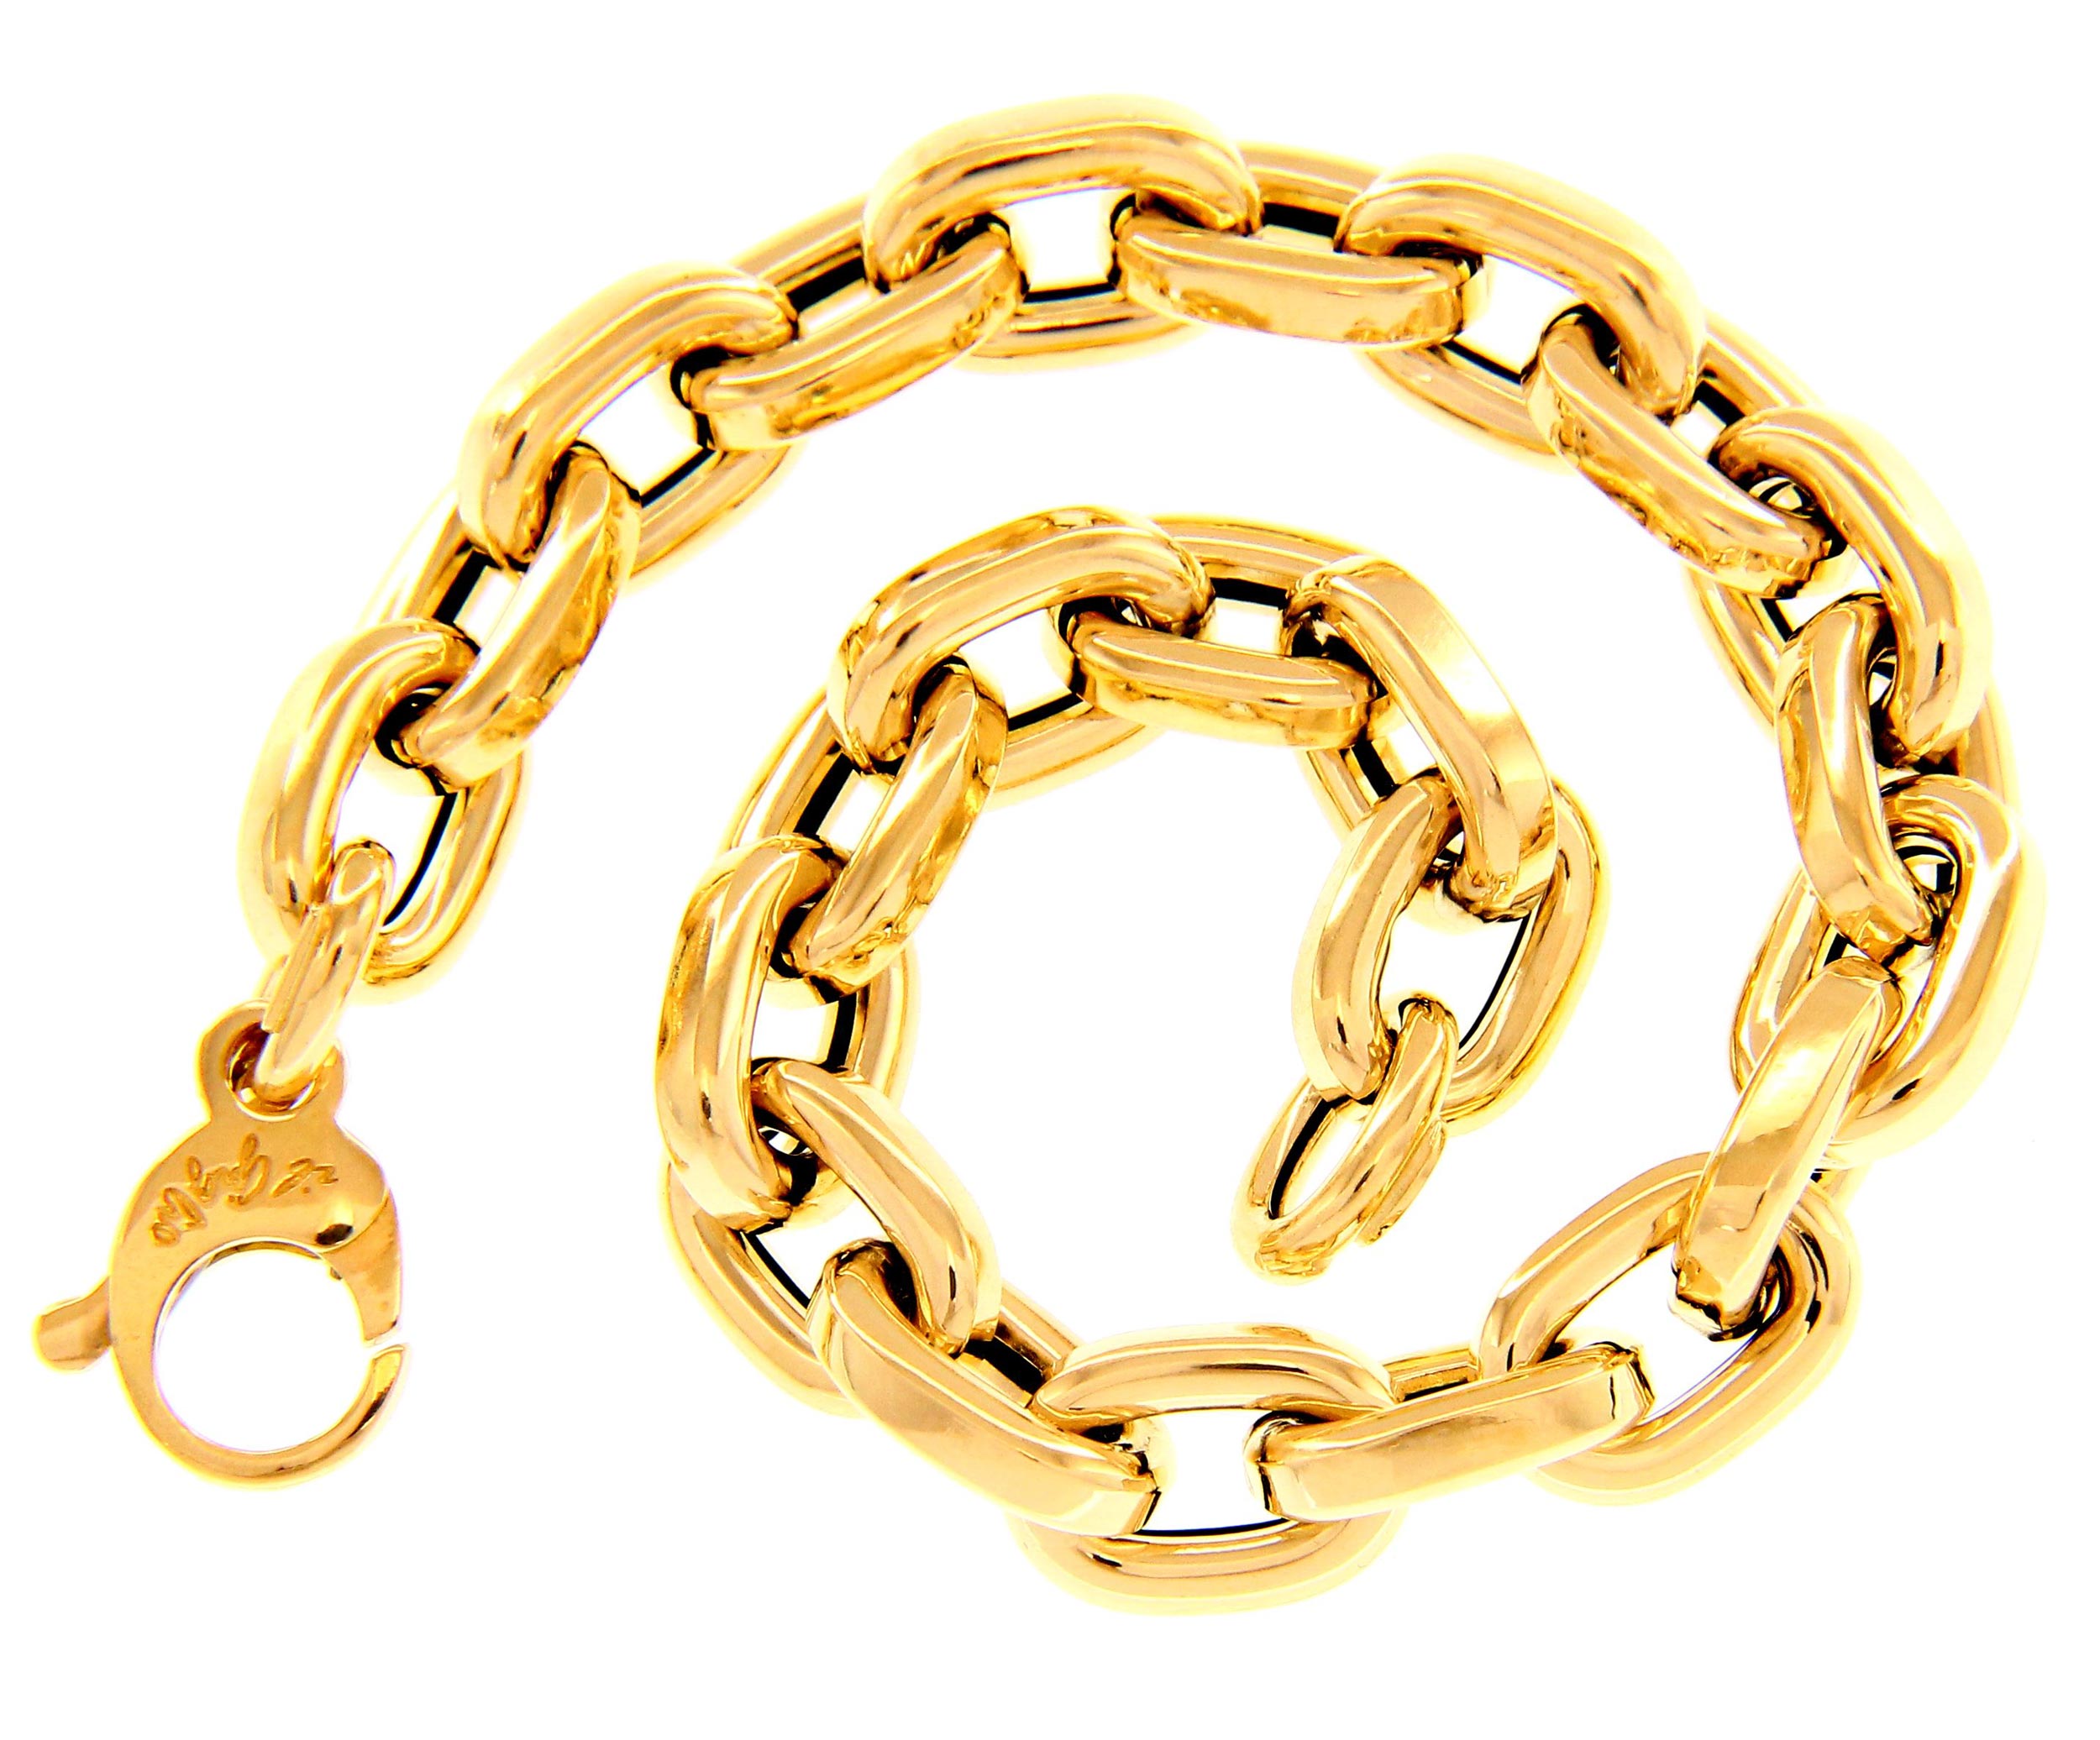 Beautiful 18ct Yellow Gold Chain Links Bracelet